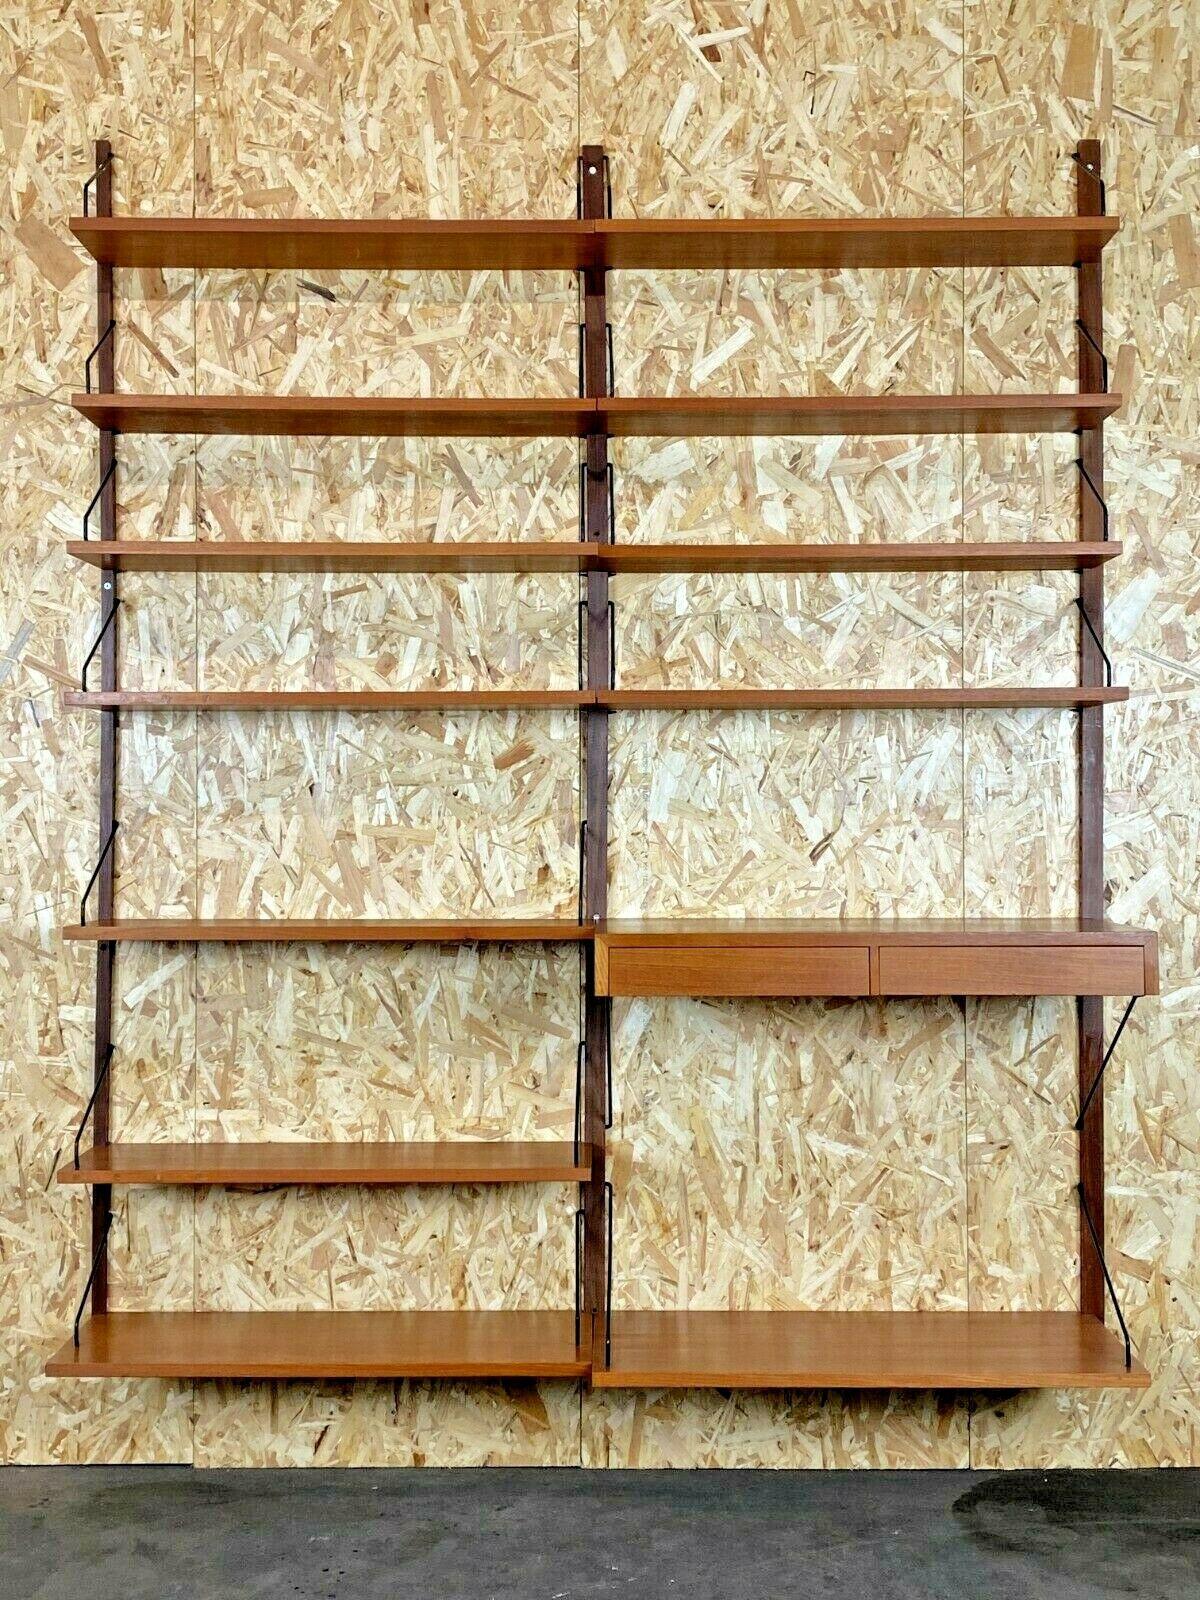 60s 70s Teak shelf wall unit Cado Poul Cadovius Danish Design

Object: wall unit

Manufacturer: Cado

Condition: good

Age: around 1960-1970

Dimensions:

161cm x 40cm x 200cm

Other notes:

The pictures serve as part of the